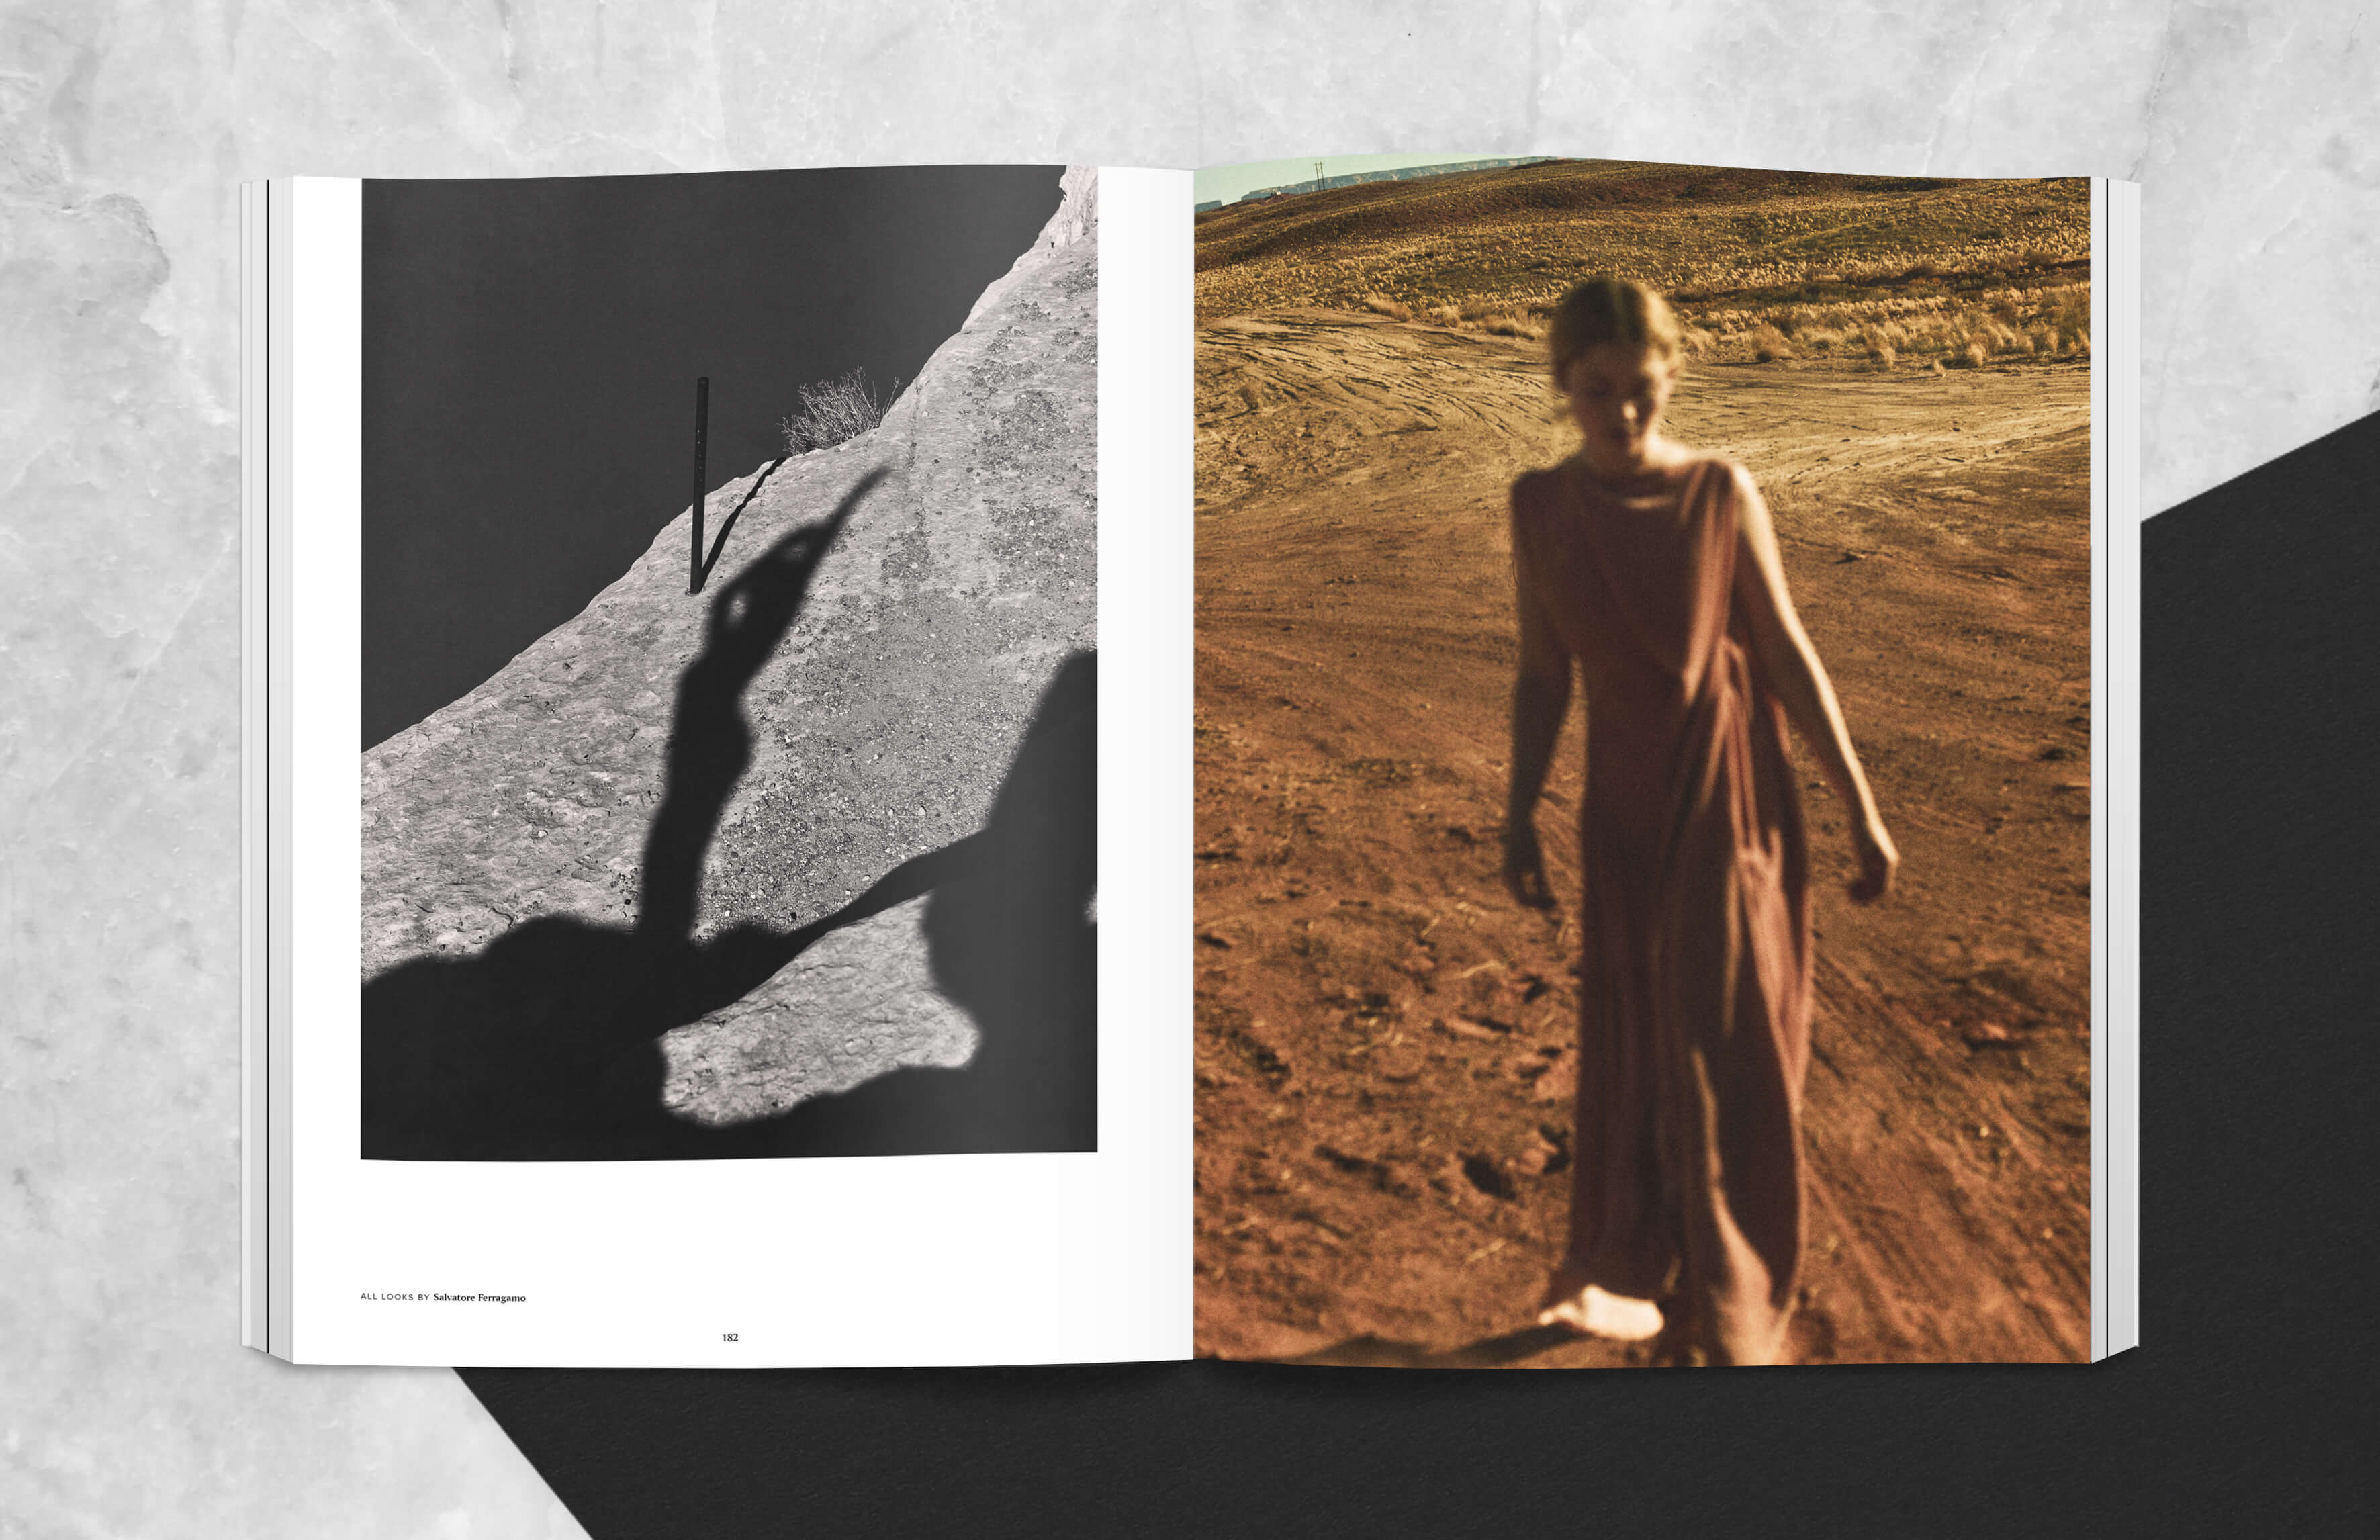 Magazine spread showing actress Virginia Gardner in desert